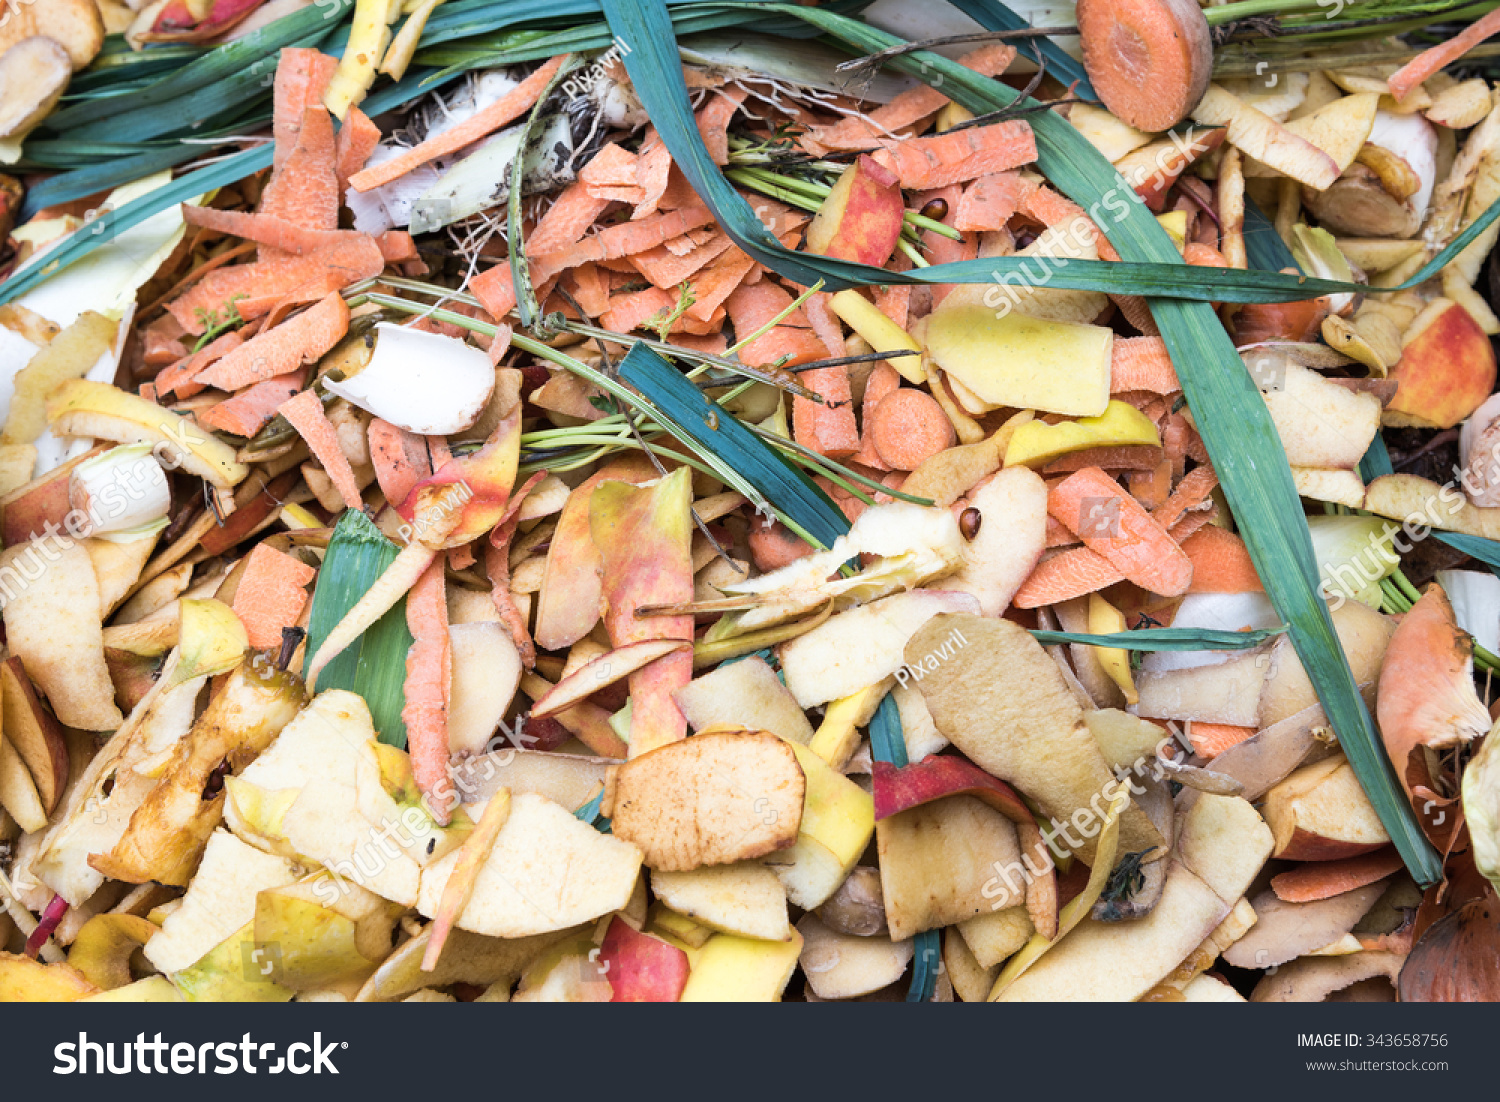 Composting Kitchen Waste Plastic Compost Bin Stock Photo 343658756